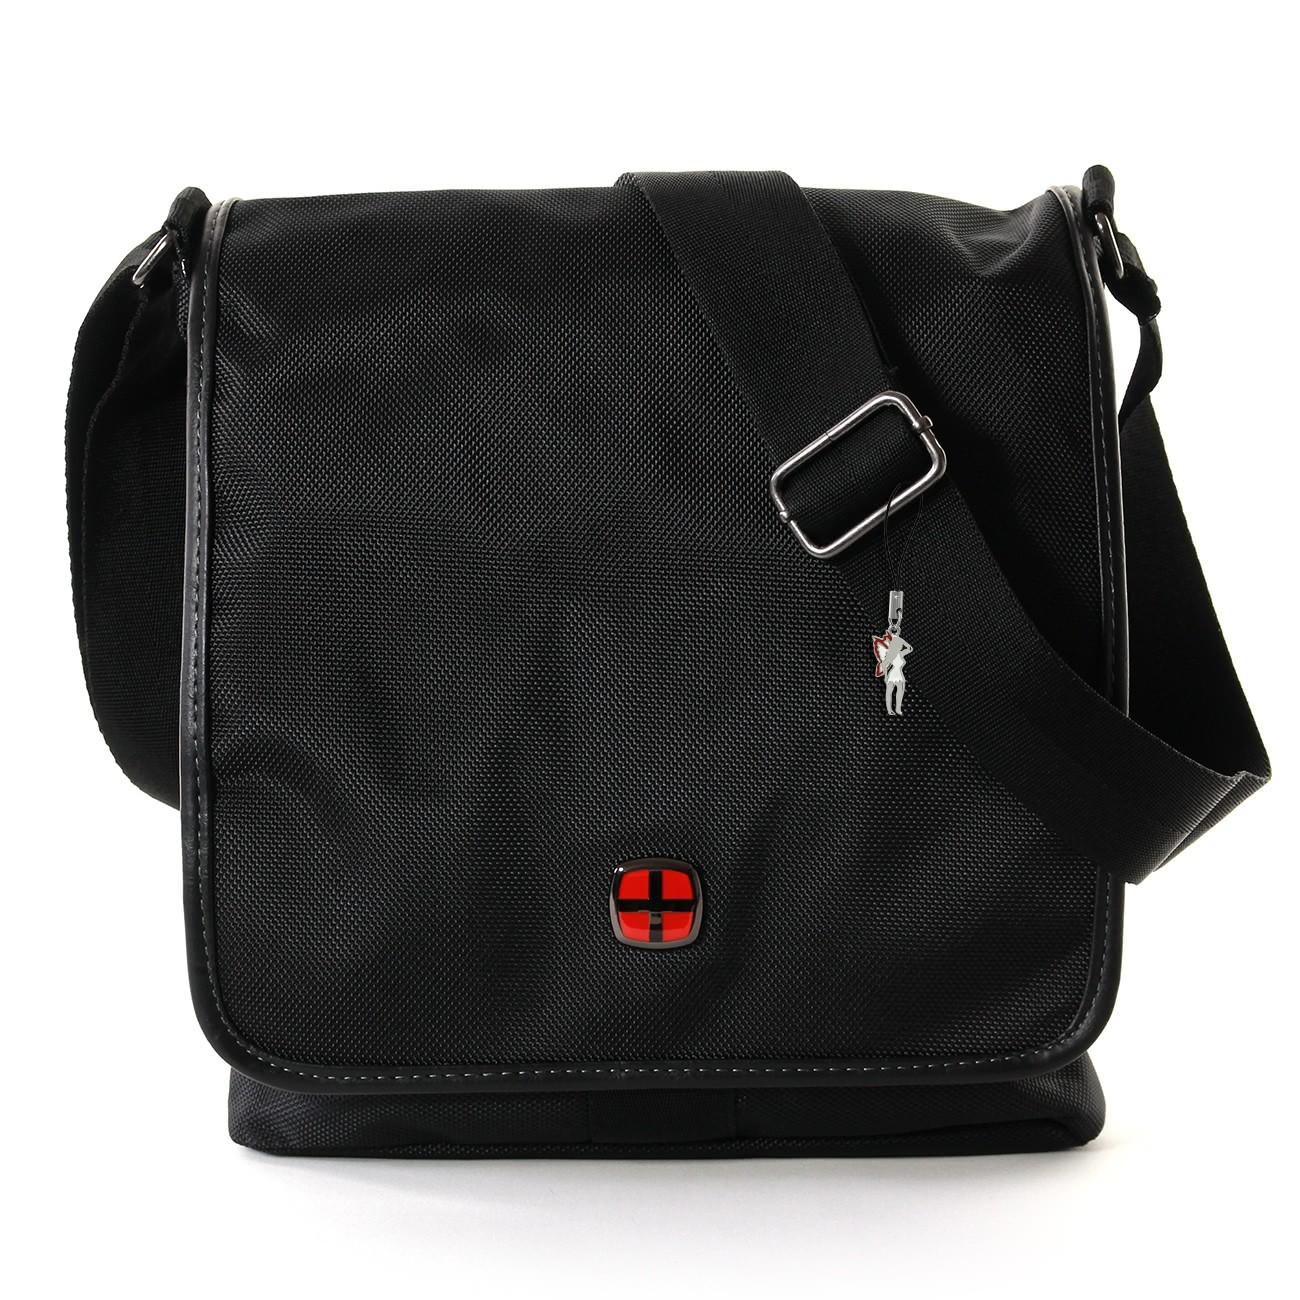 New Bags Business MessengerBag schwarz Polyester Umhängetasche Crossover OTD211S